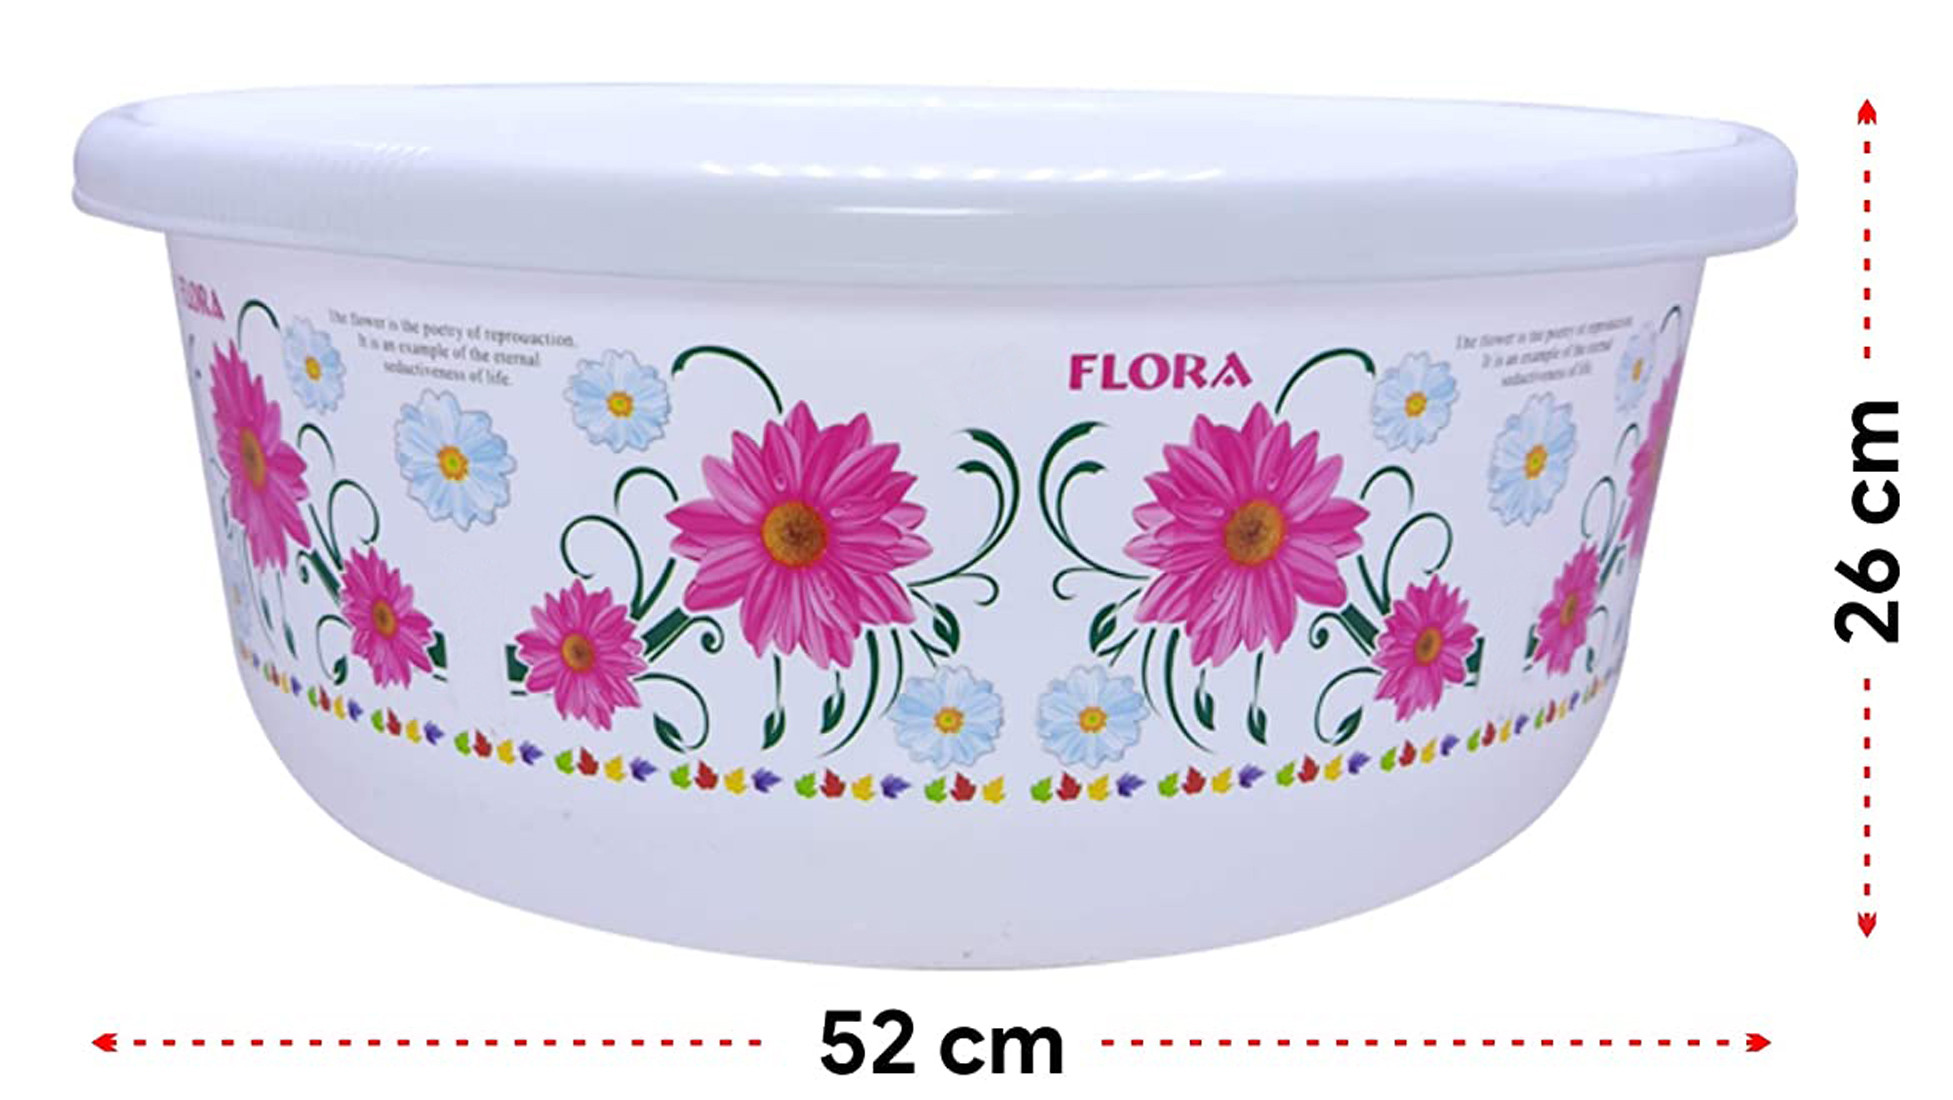 Kuber Industries Floral Print Unbreakable Plastic Multipurpose Bath Tub/Washing Tub 40 LTR (White)-KUBMART3186